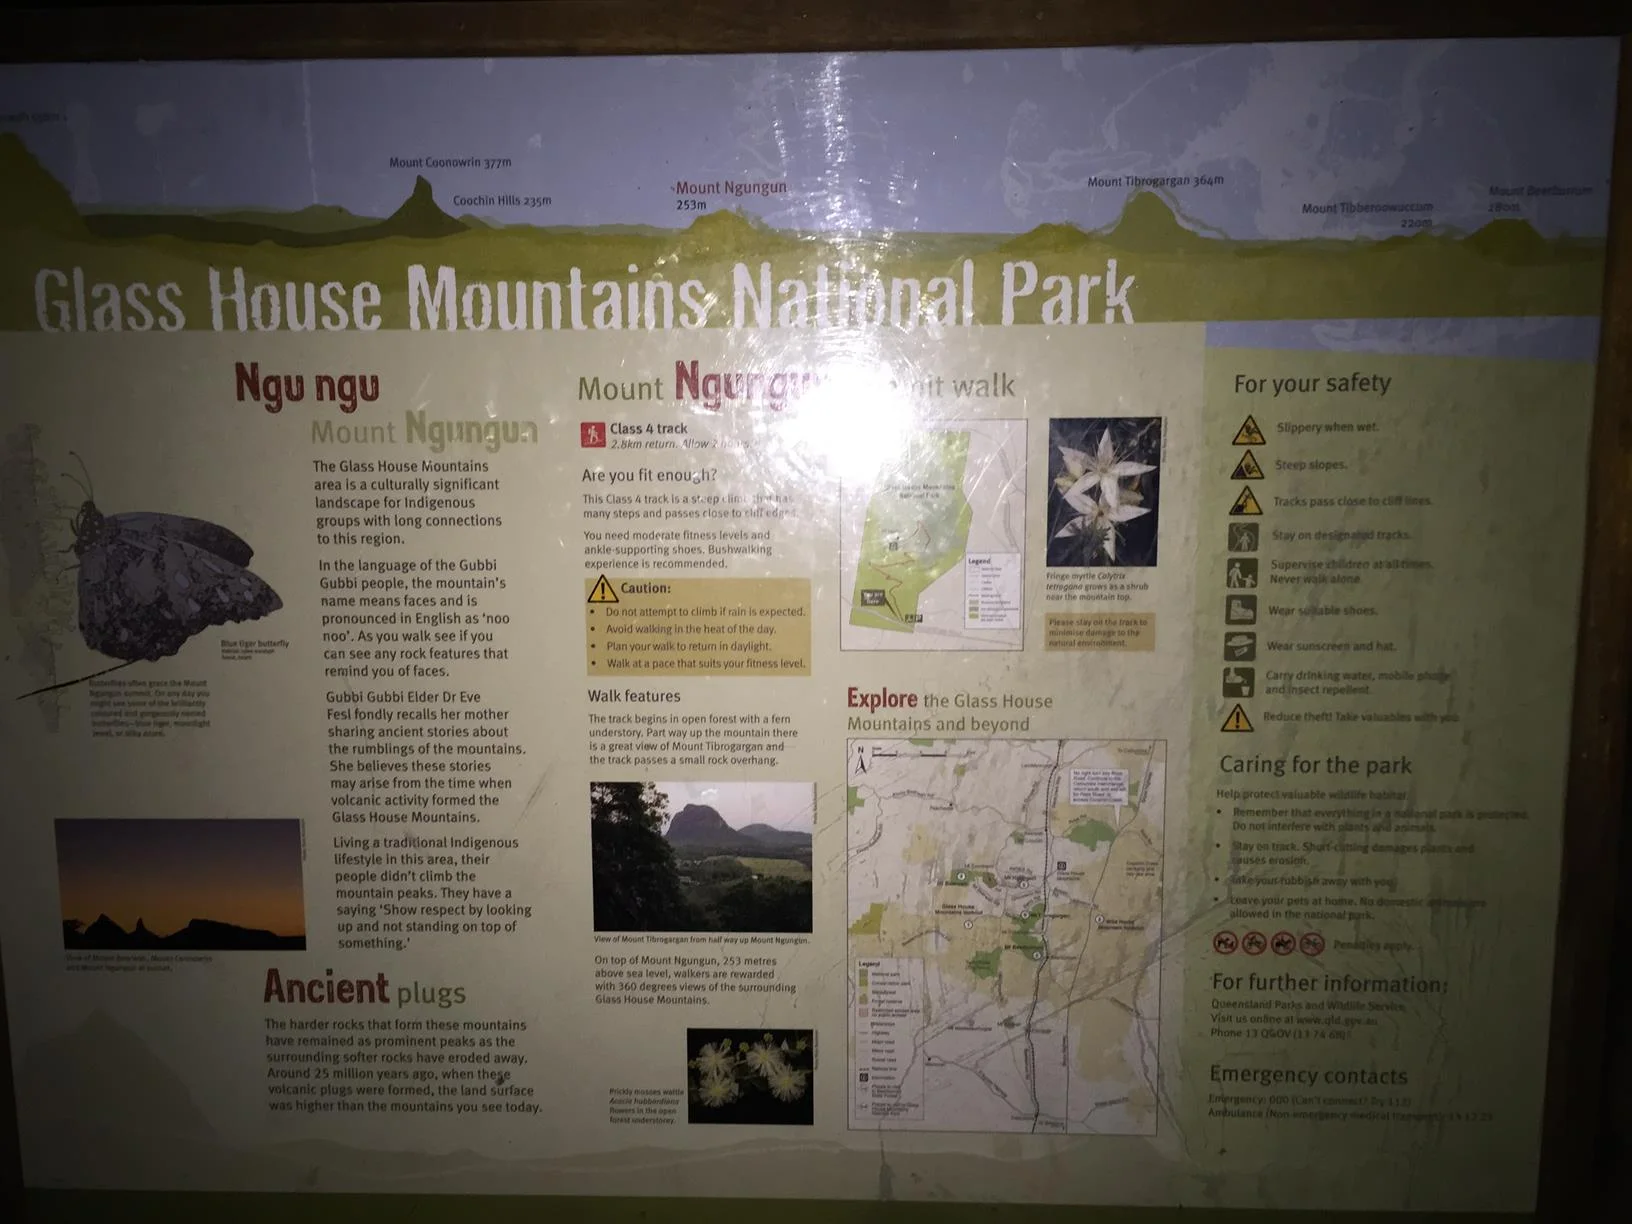 Glass House Mountains National Park: Mt. Ngungun Summit 